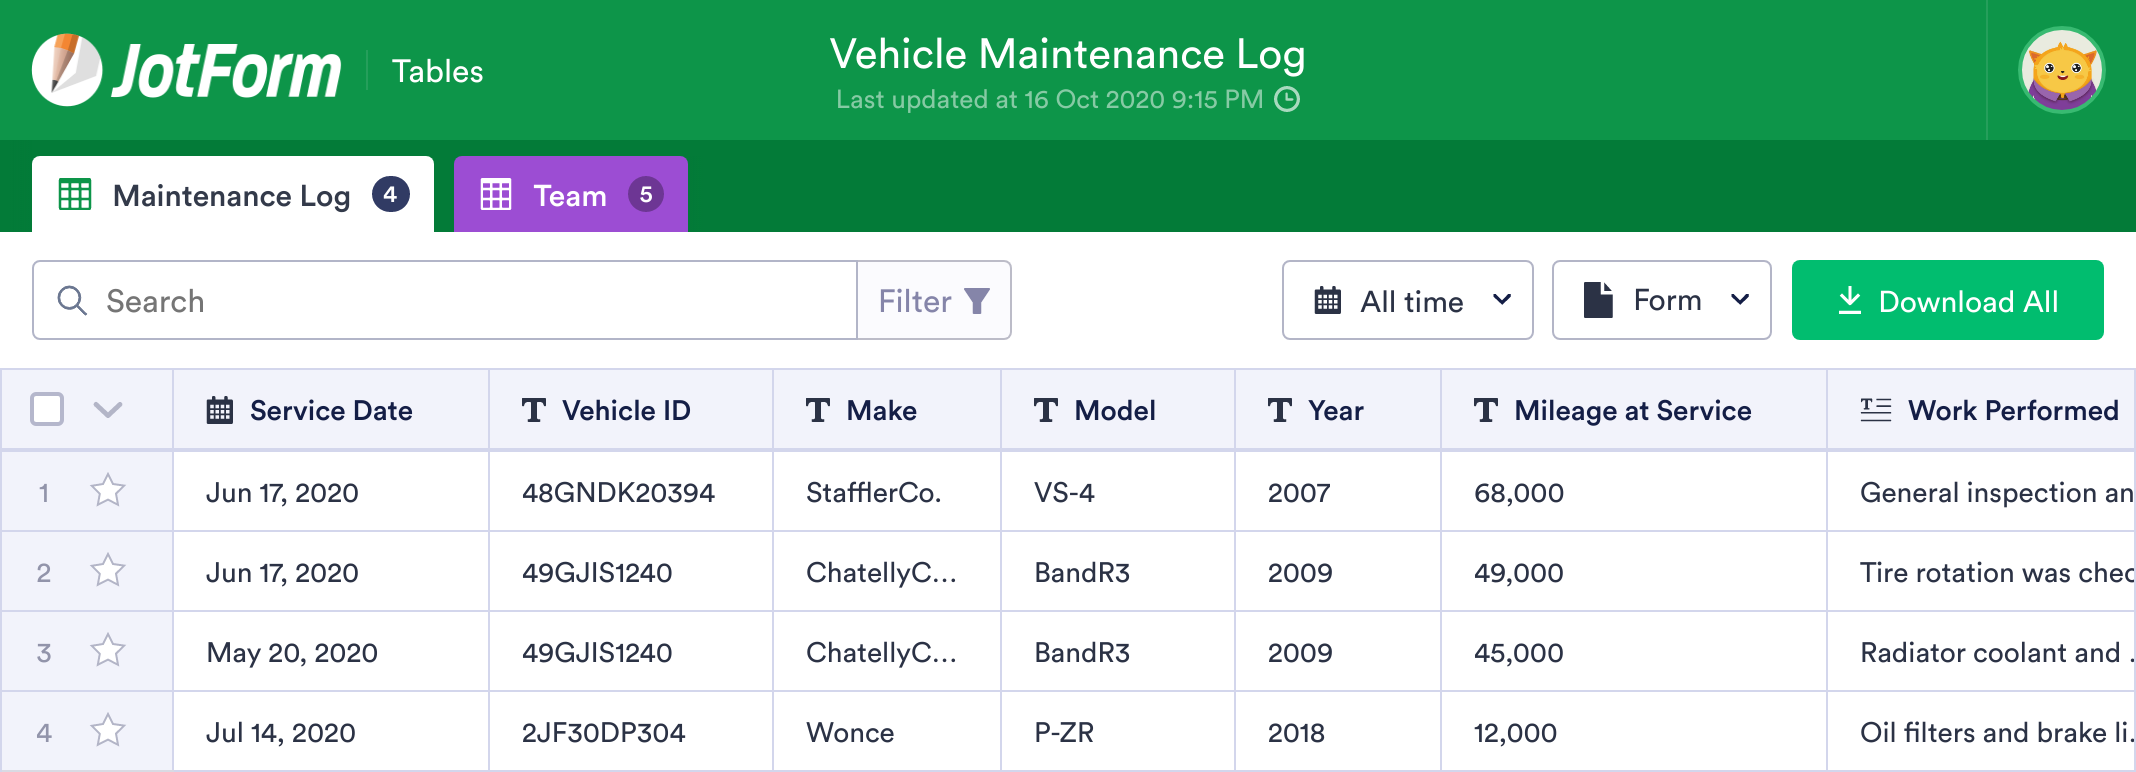 vehicle-maintenance-log-template-jotform-tables